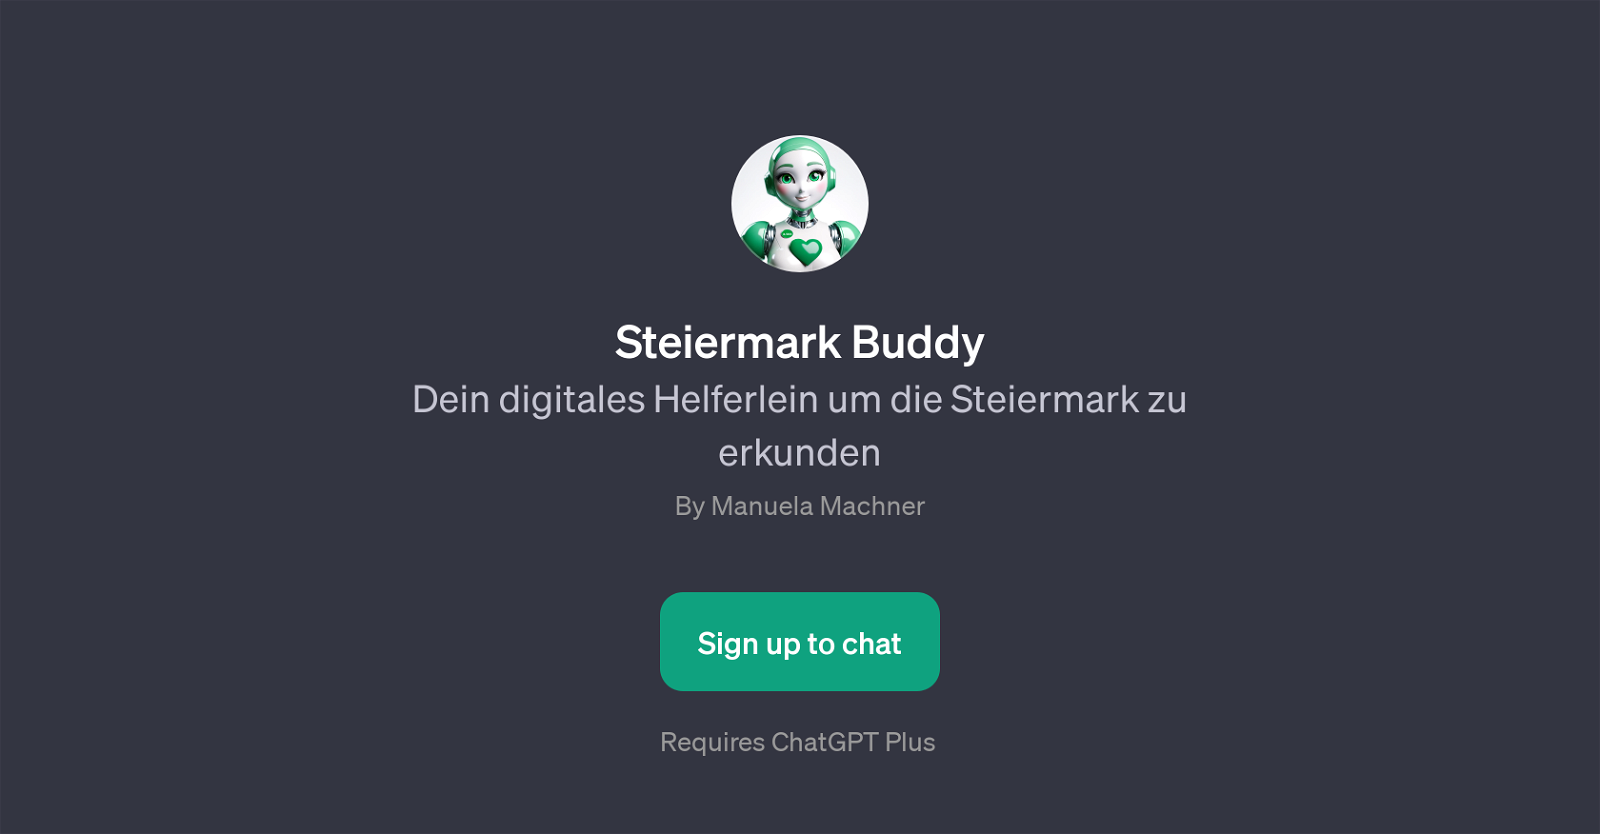 Steiermark Buddy website